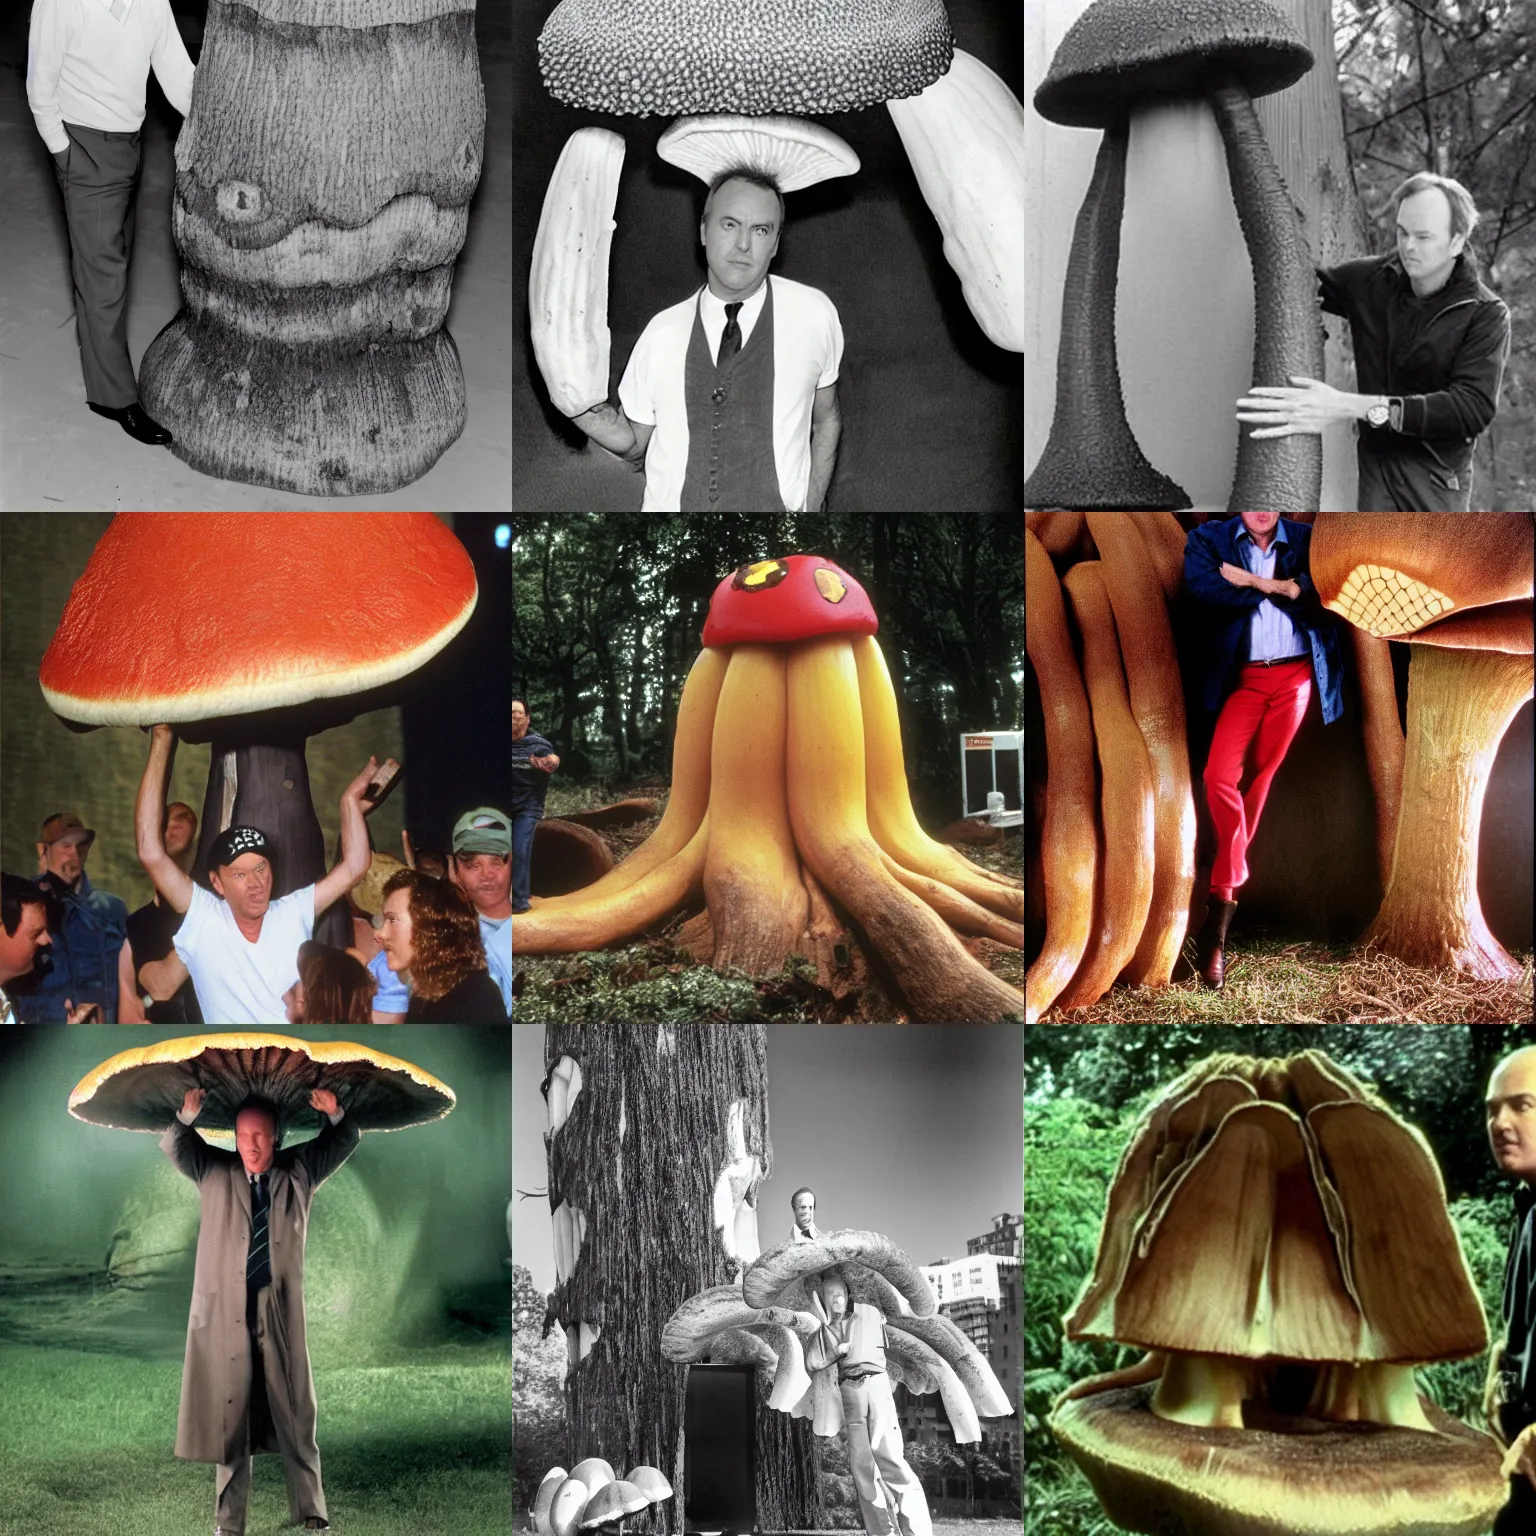 Prompt: Michael Keaton emerging from gigantic fungus mushroom the first McDonald's